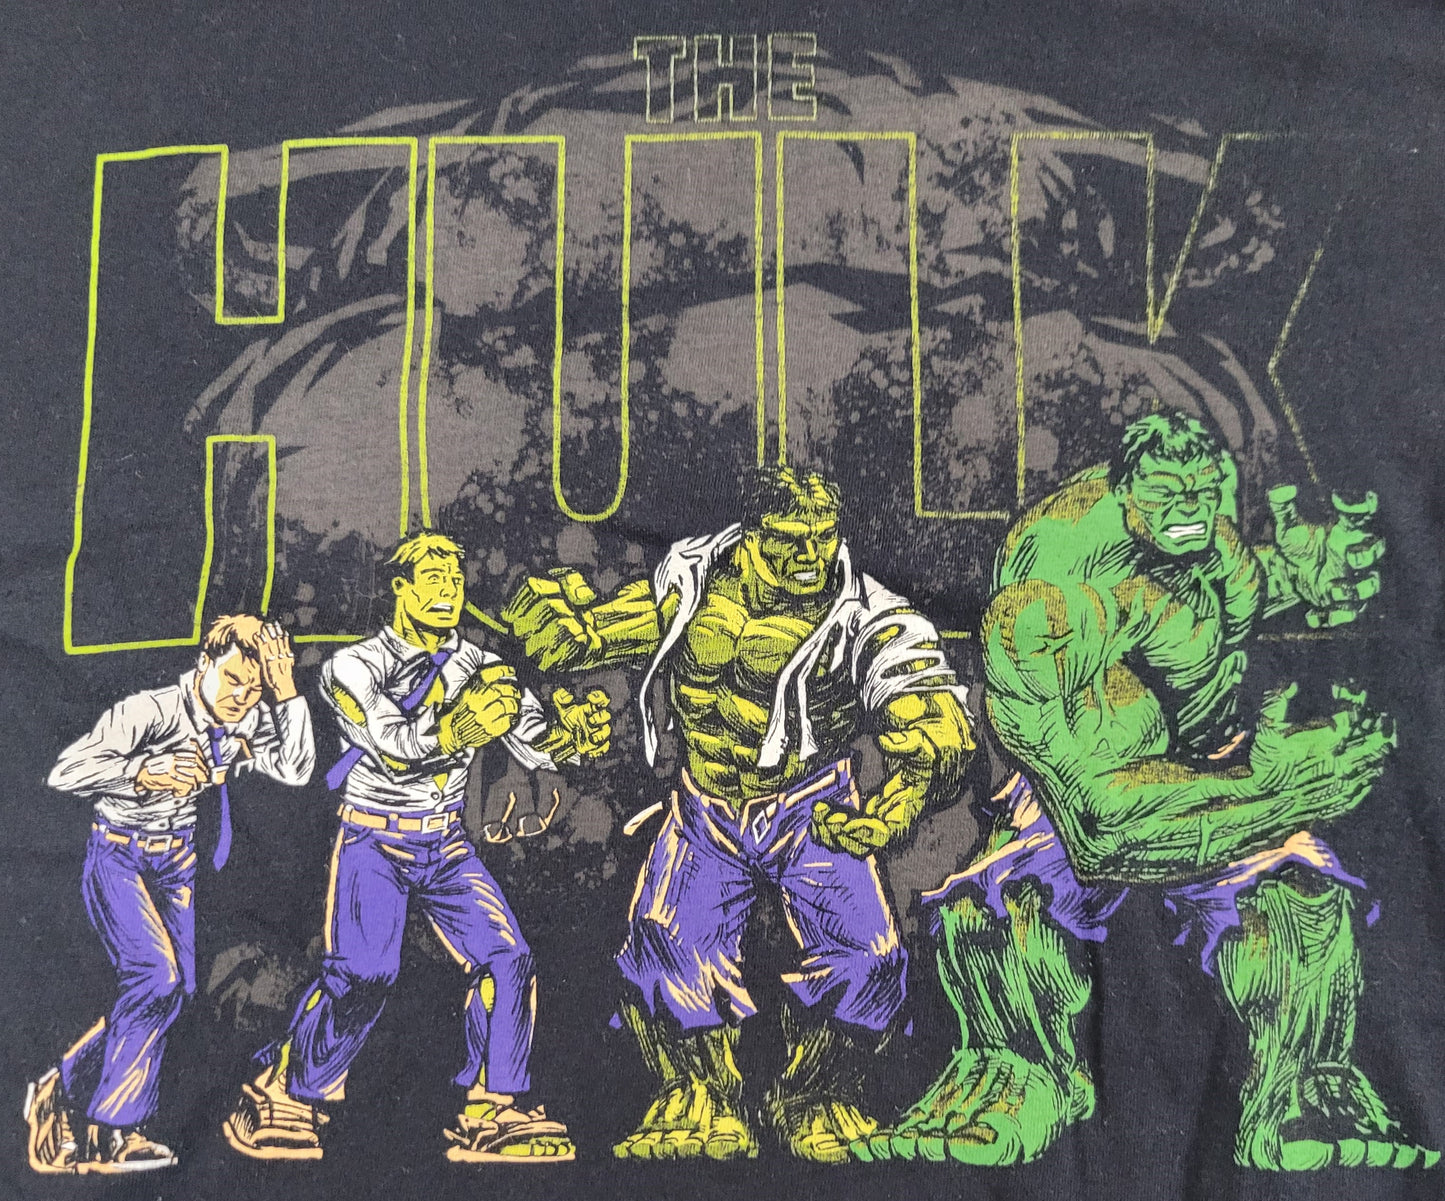 Incredible Hulk David Banner Marvel Funko Pop Mens T-Shirt